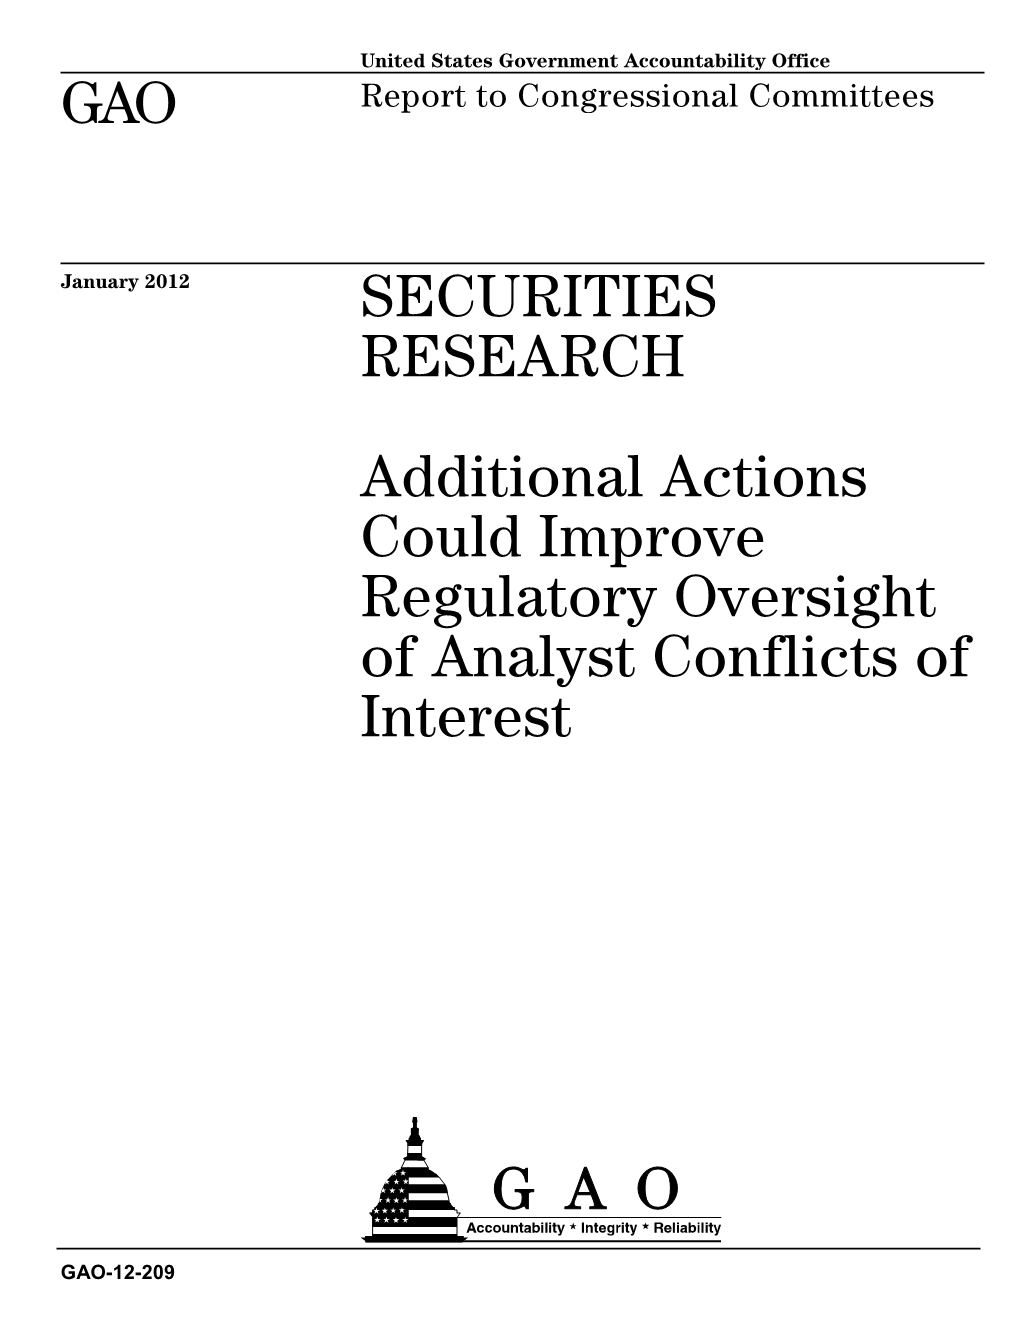 GAO-12-209, Securities Research